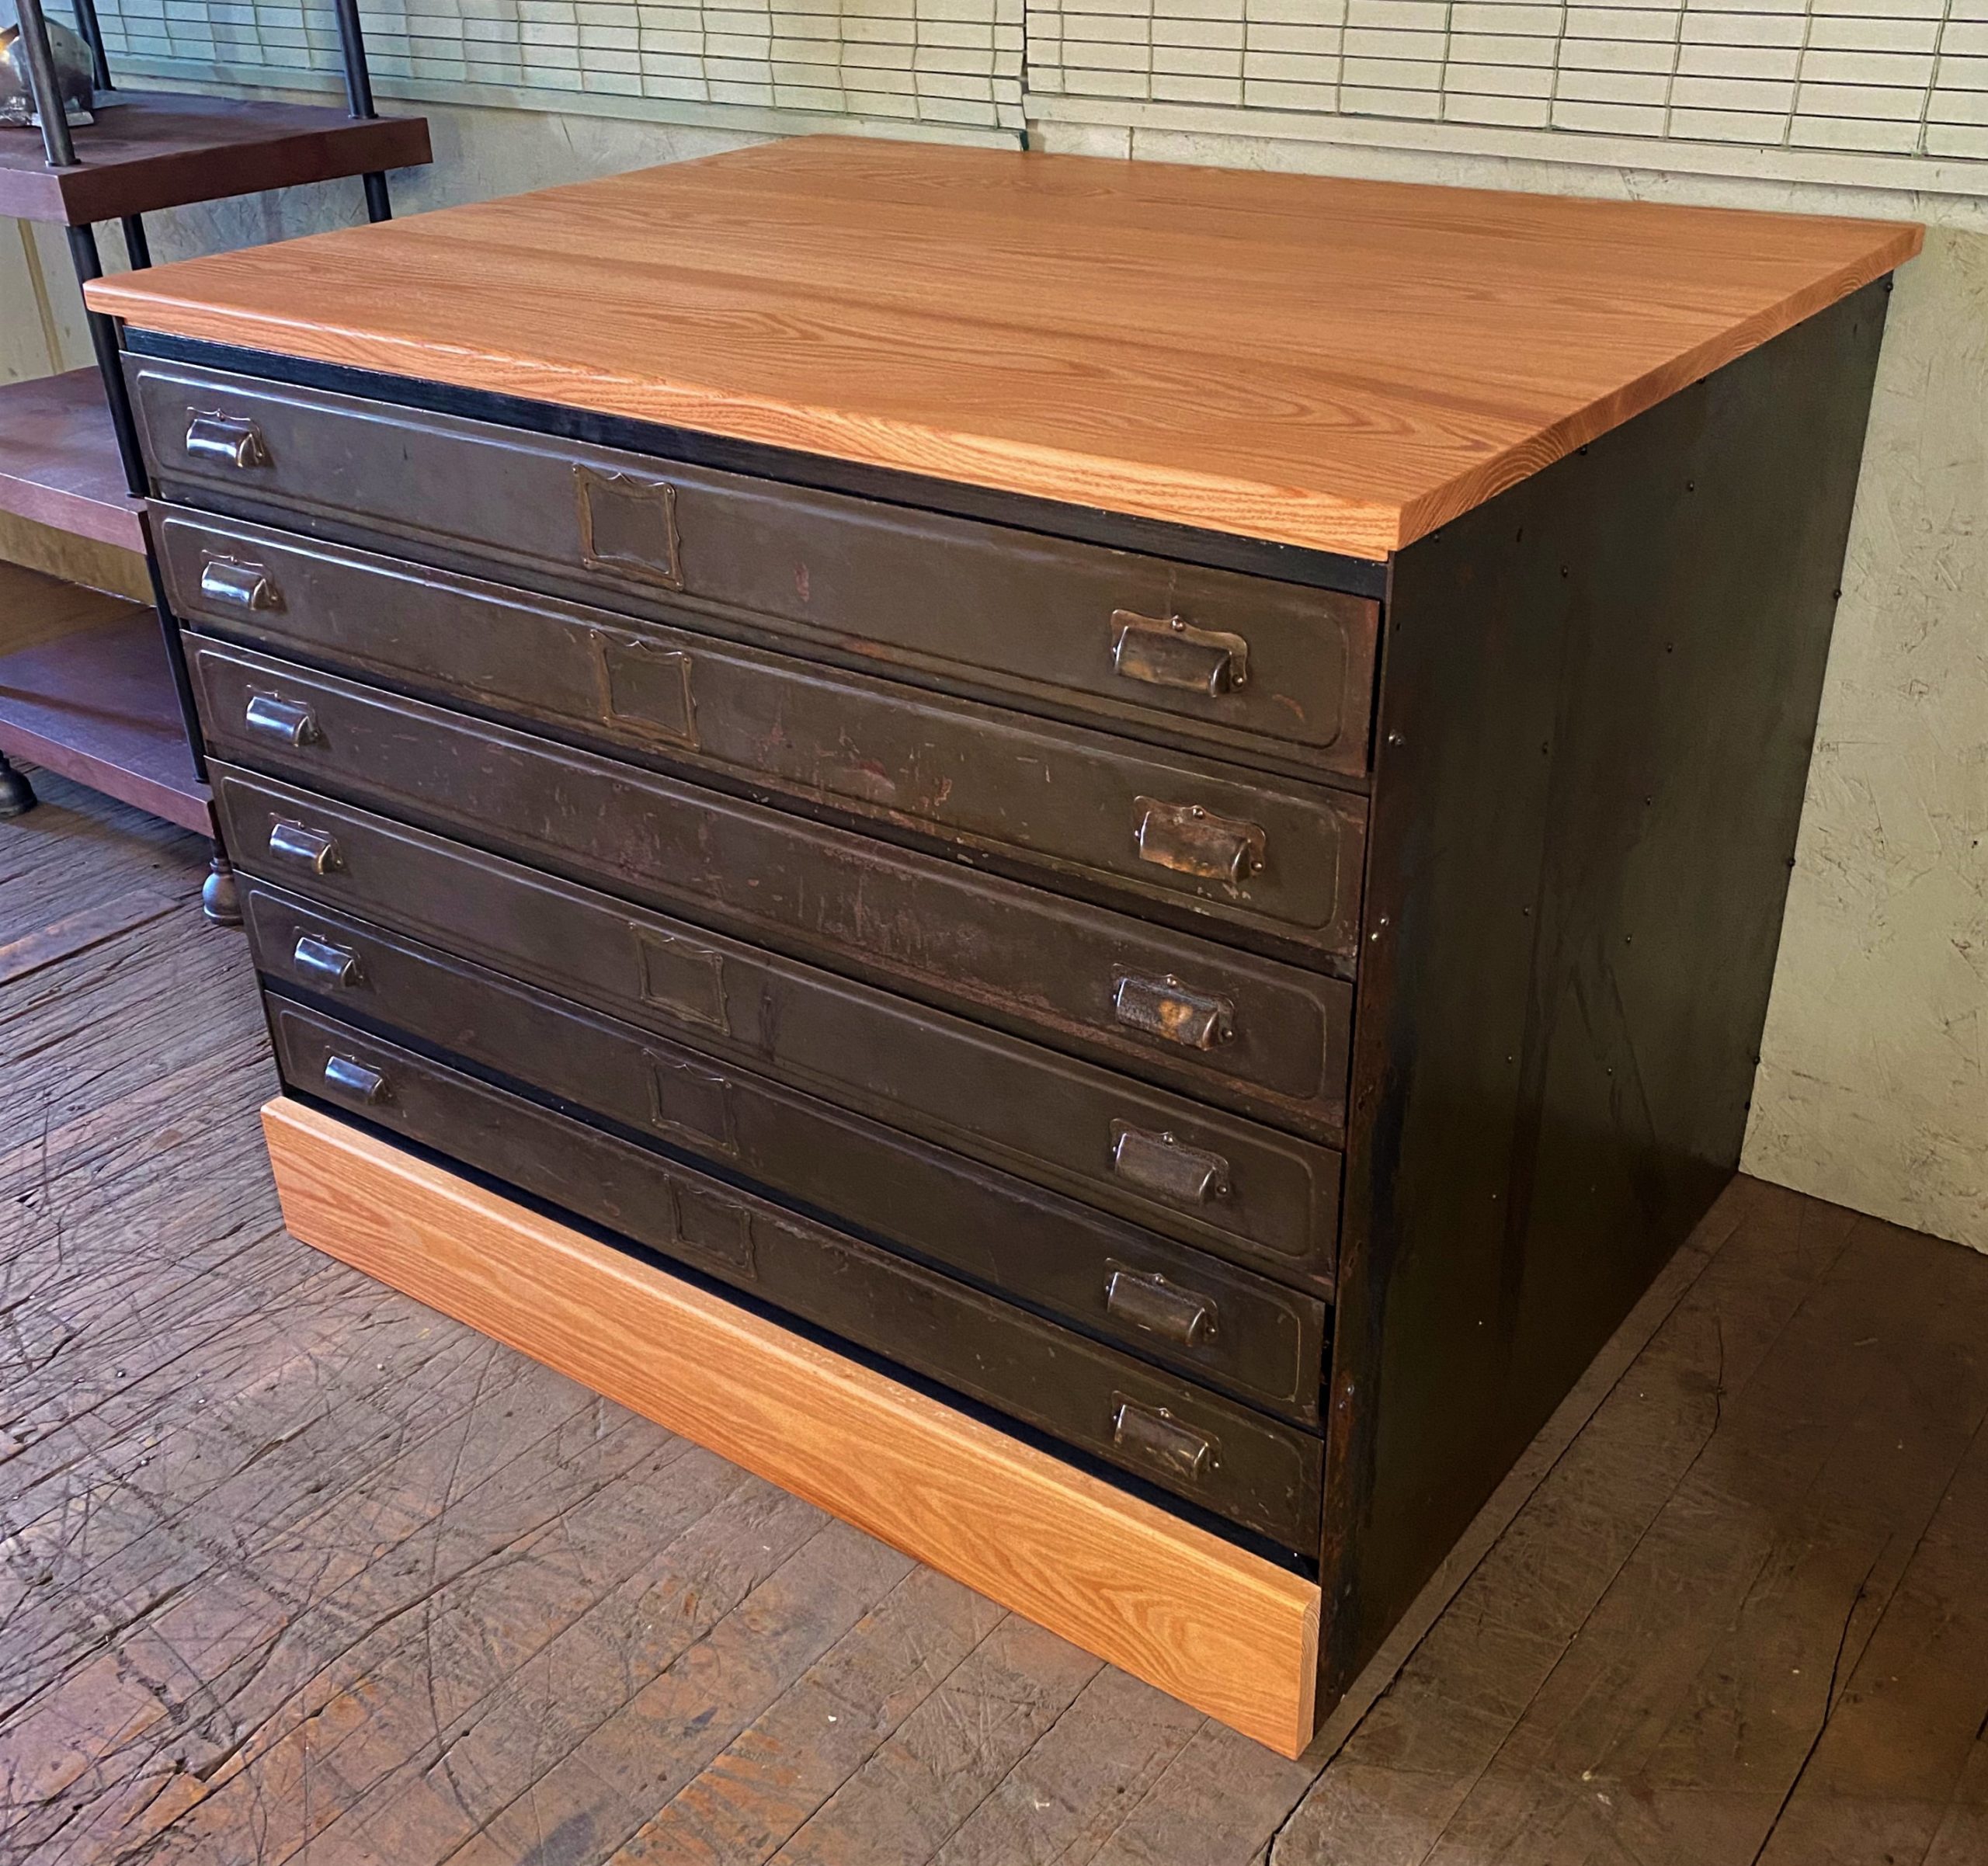 Antique Pine Flat File Cabinet - SOLD - Vintage Industrial by Get Back, Inc